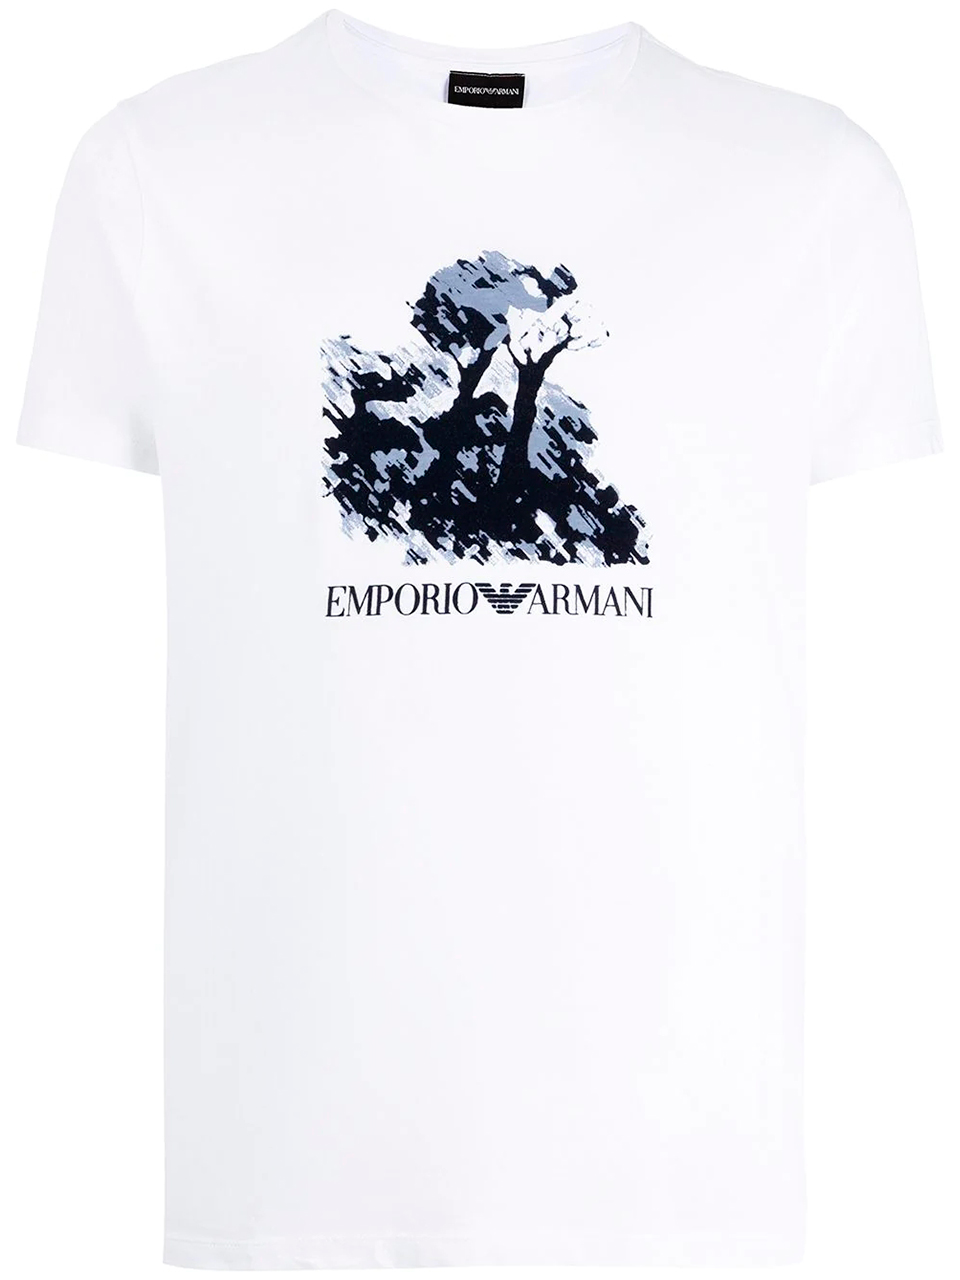 Imagem de: Camiseta Emporio Armani Branca com Estampa Pintura